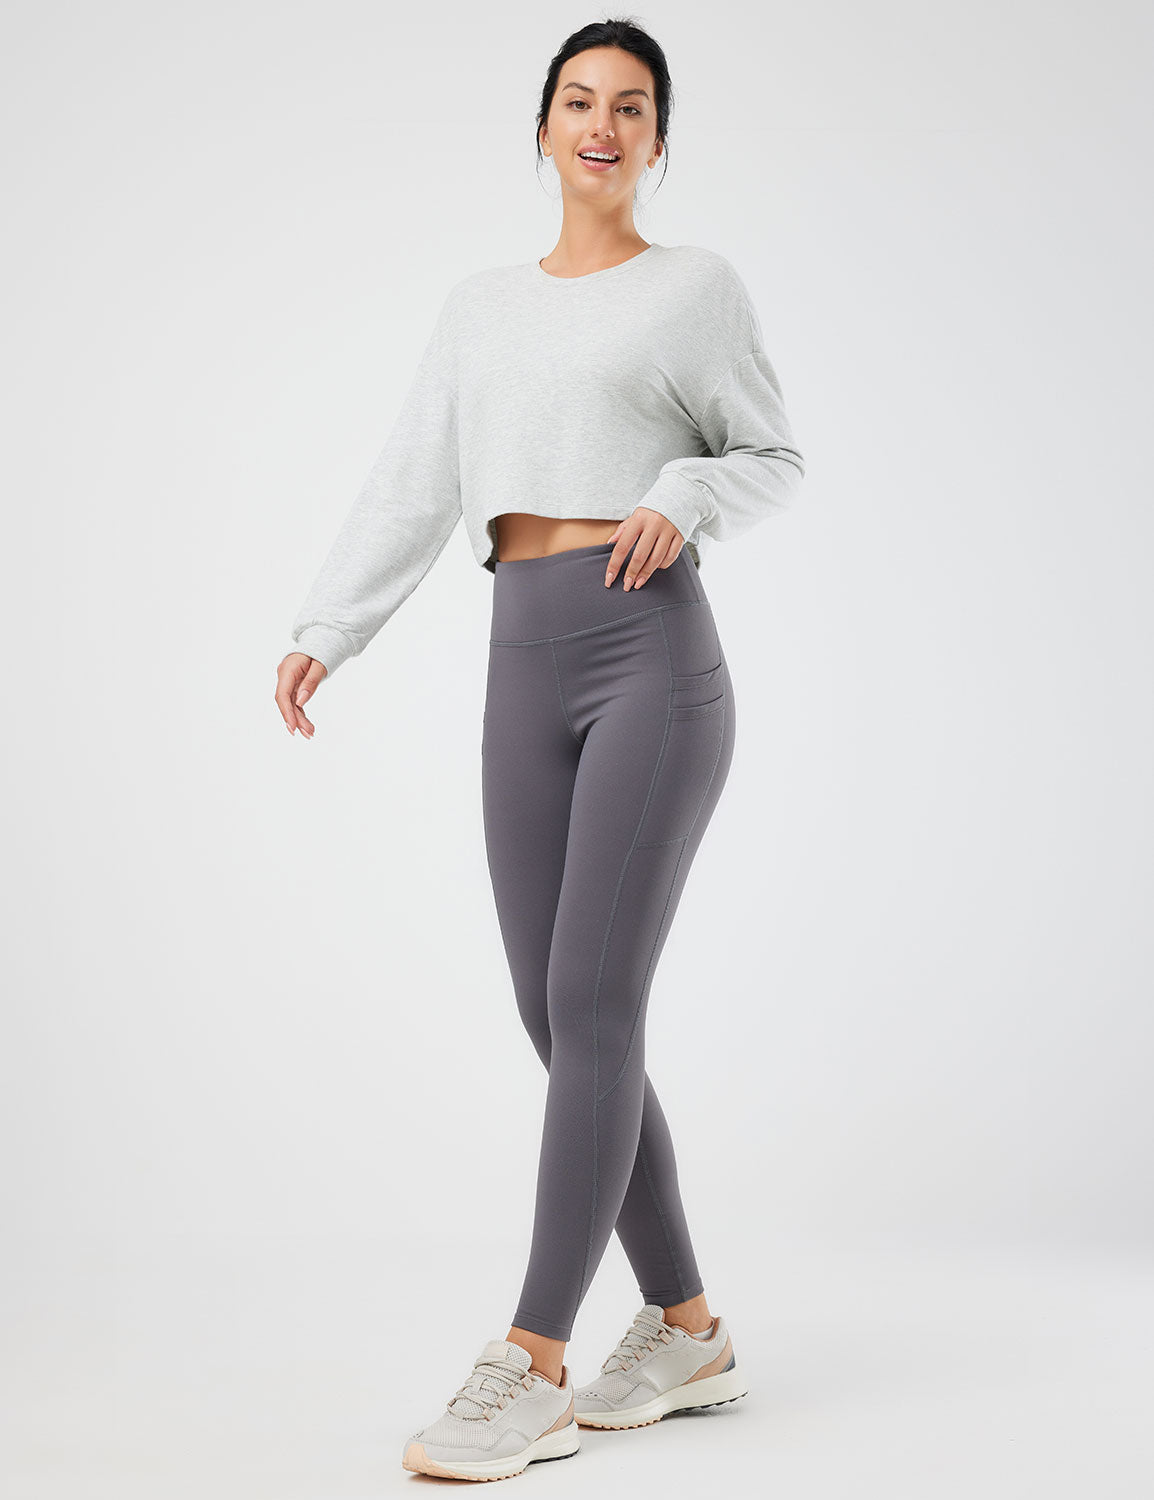 Baleaf Women's Evergreen Modal Oversized Cropped Top (Website Exclusive) dbd090 Grey Full